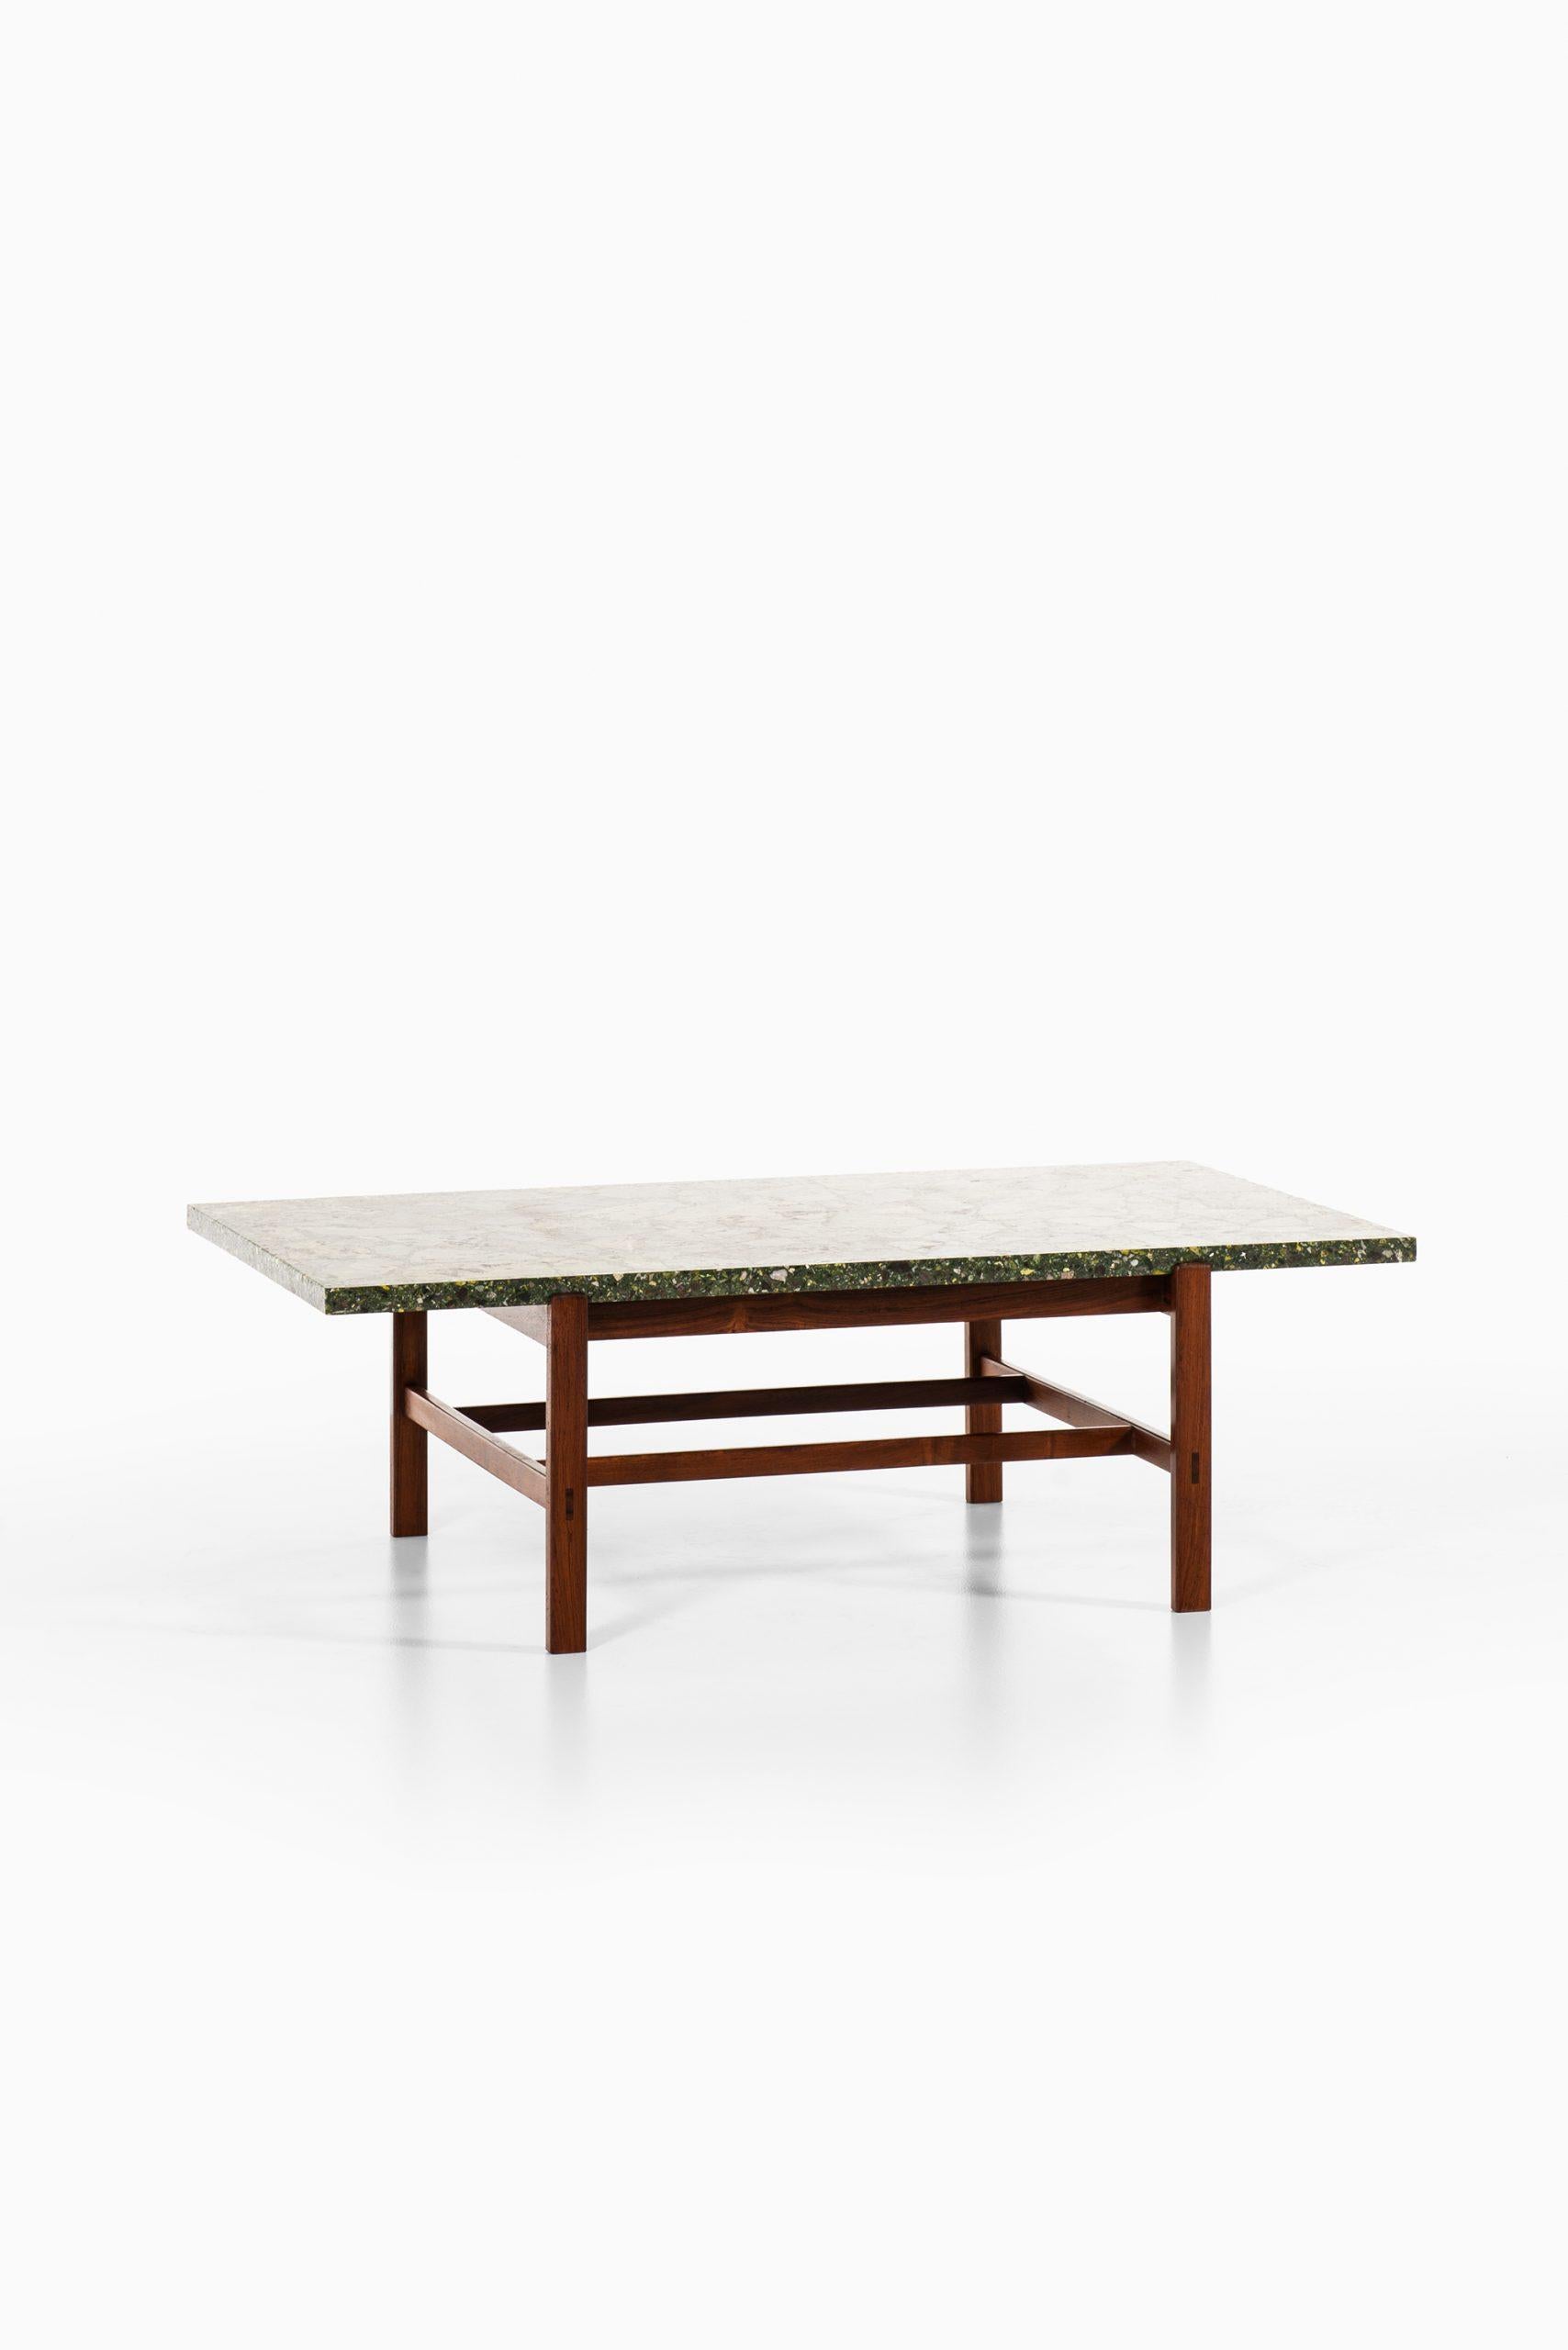 Scandinavian Modern Inge Davidsson Side Table / Coffee Table by Cabinetmaker Ernst Johansson For Sale